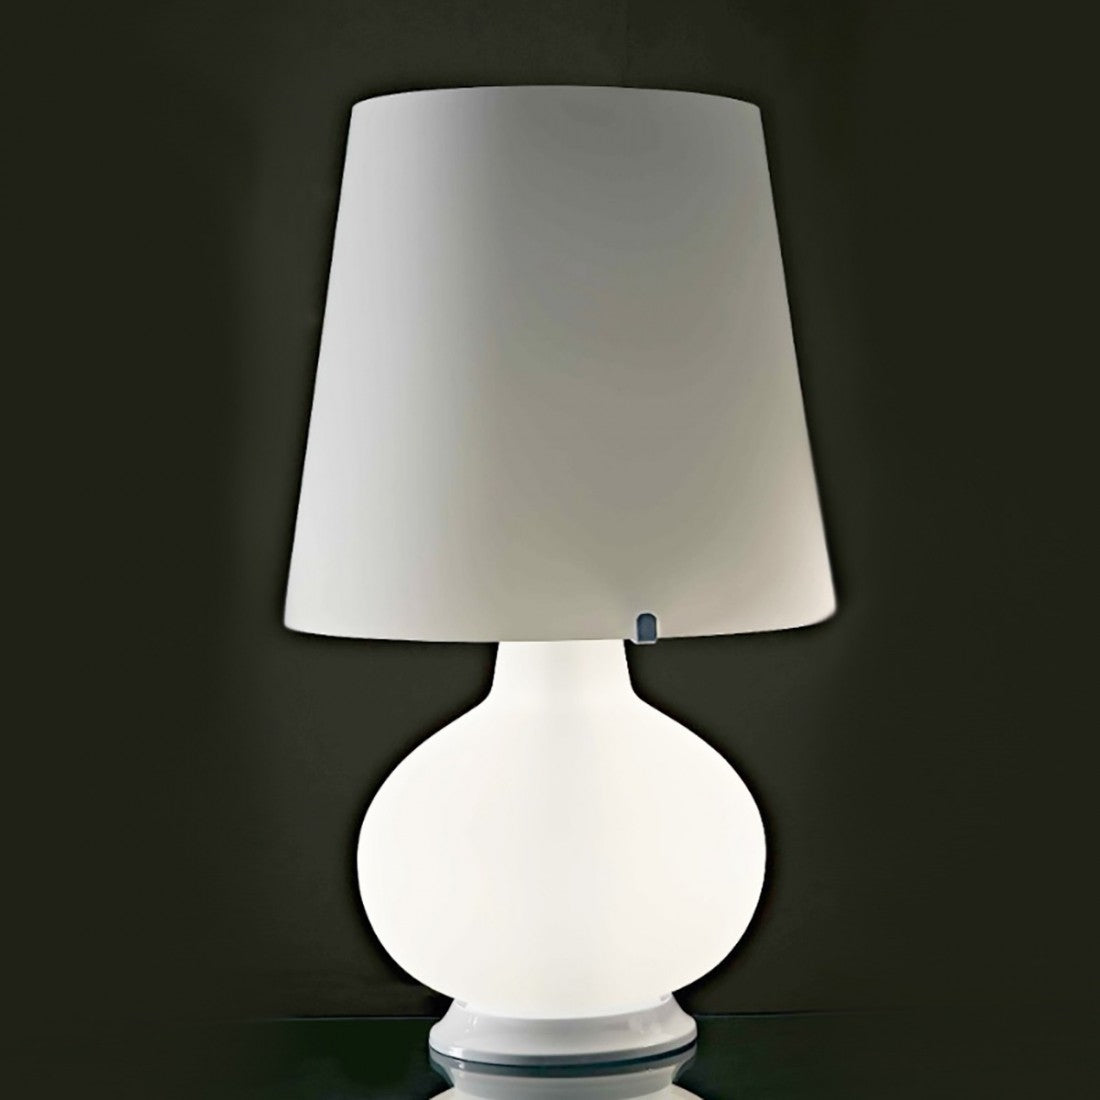 Abat-jour moderna illuminando classic g lampada tavolo metallo vetro paralume bianco interni e14 e27